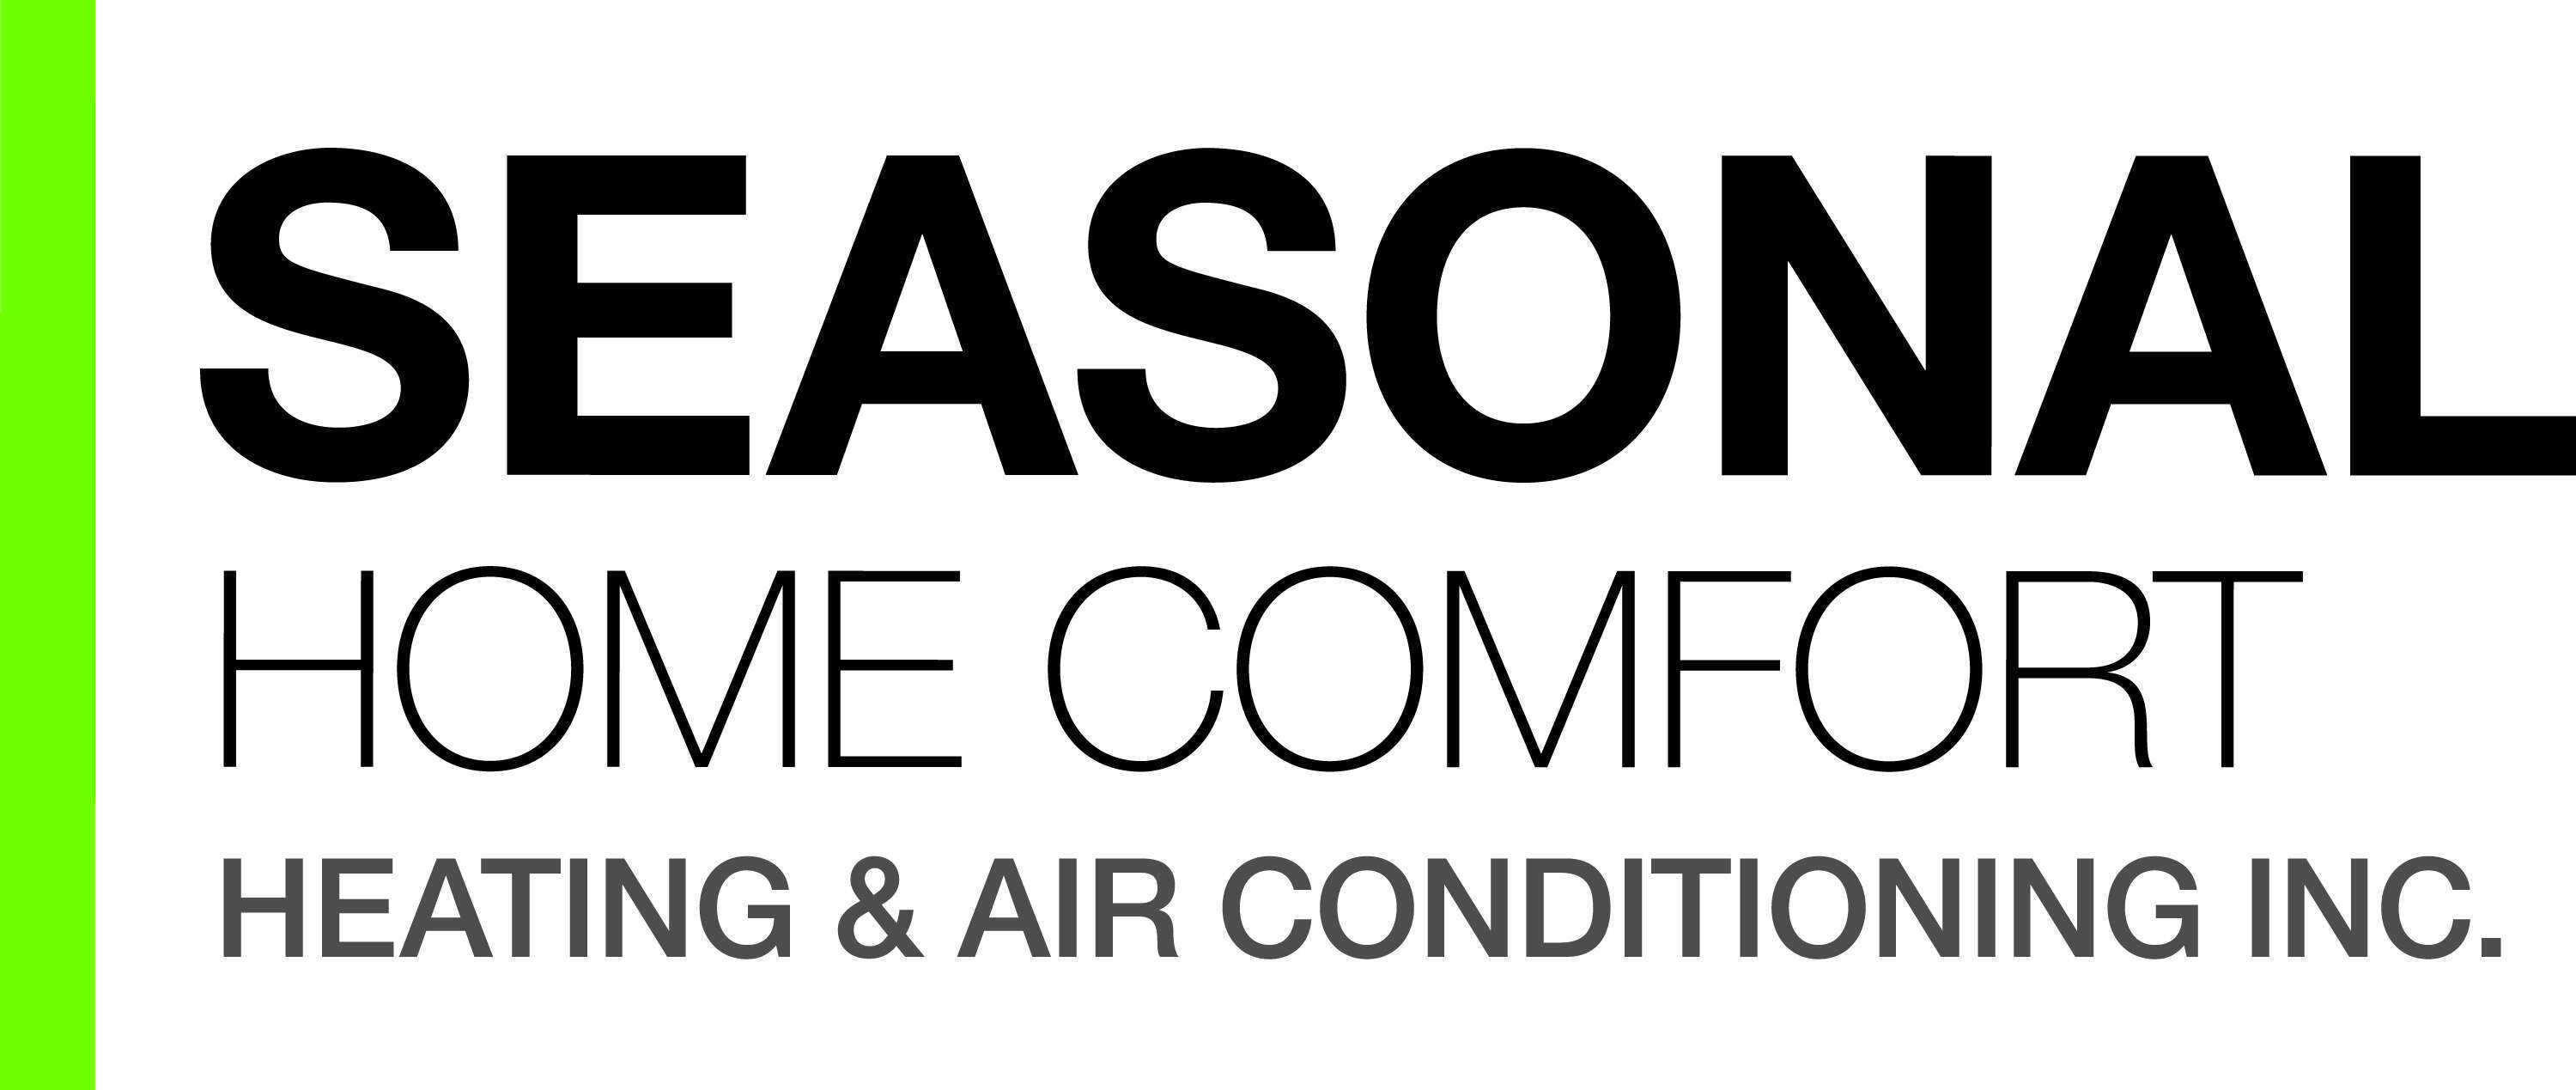 Seasonal Home Comfort